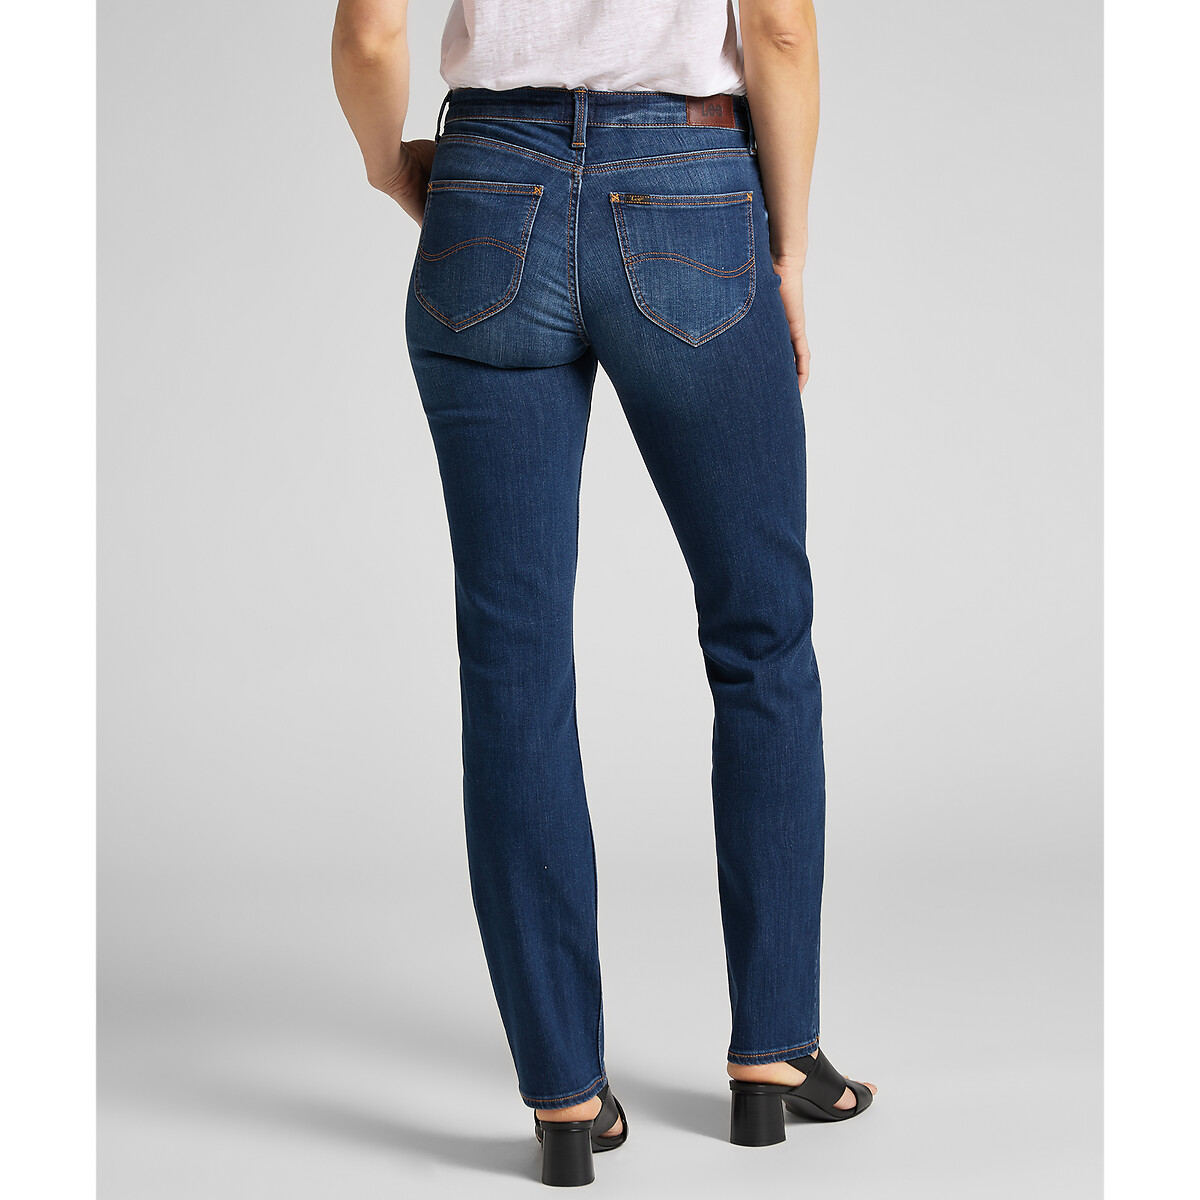 Jeans marion straight, gerades Lee | La Redoute